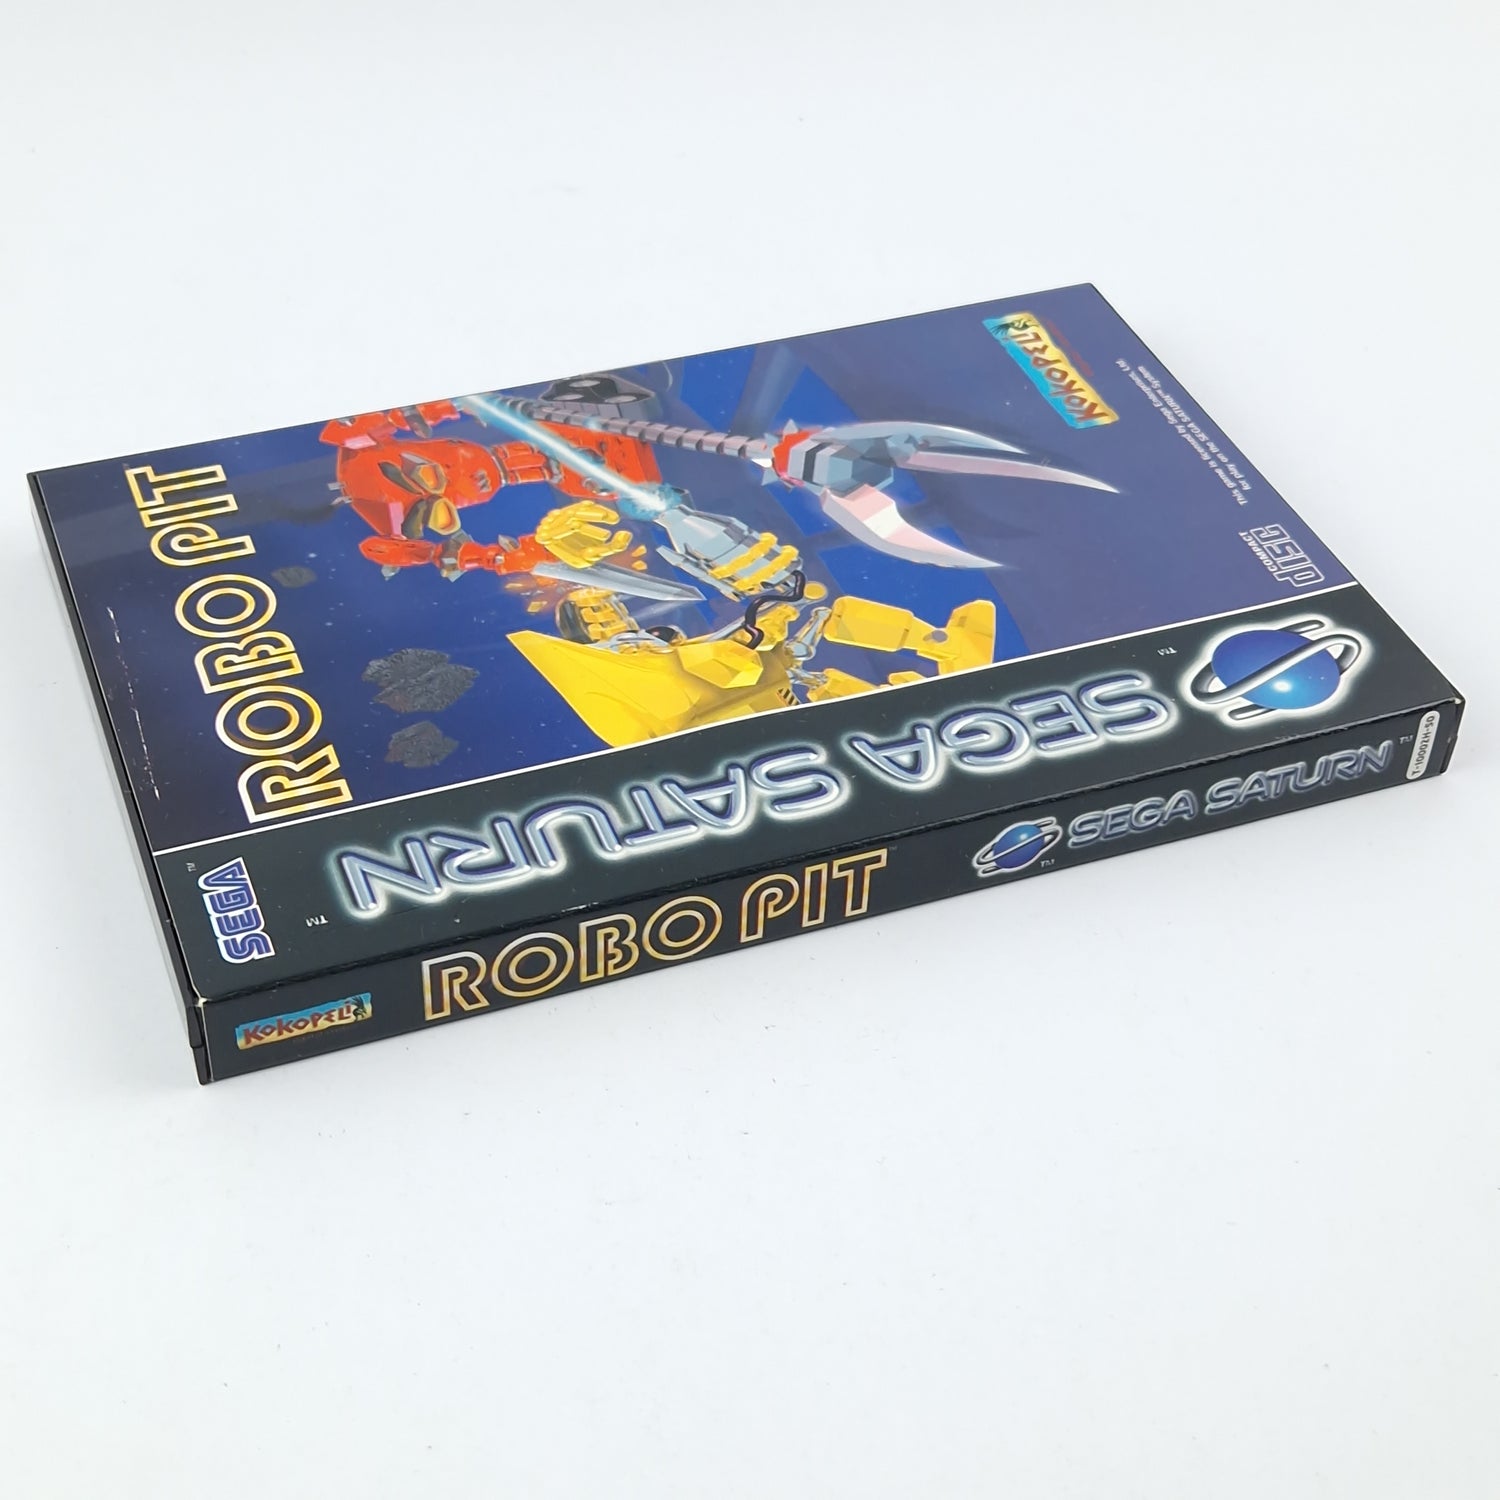 Sega Saturn Game: Robo Pit - NEW NEW Sticker SEAL OVP / Robopit